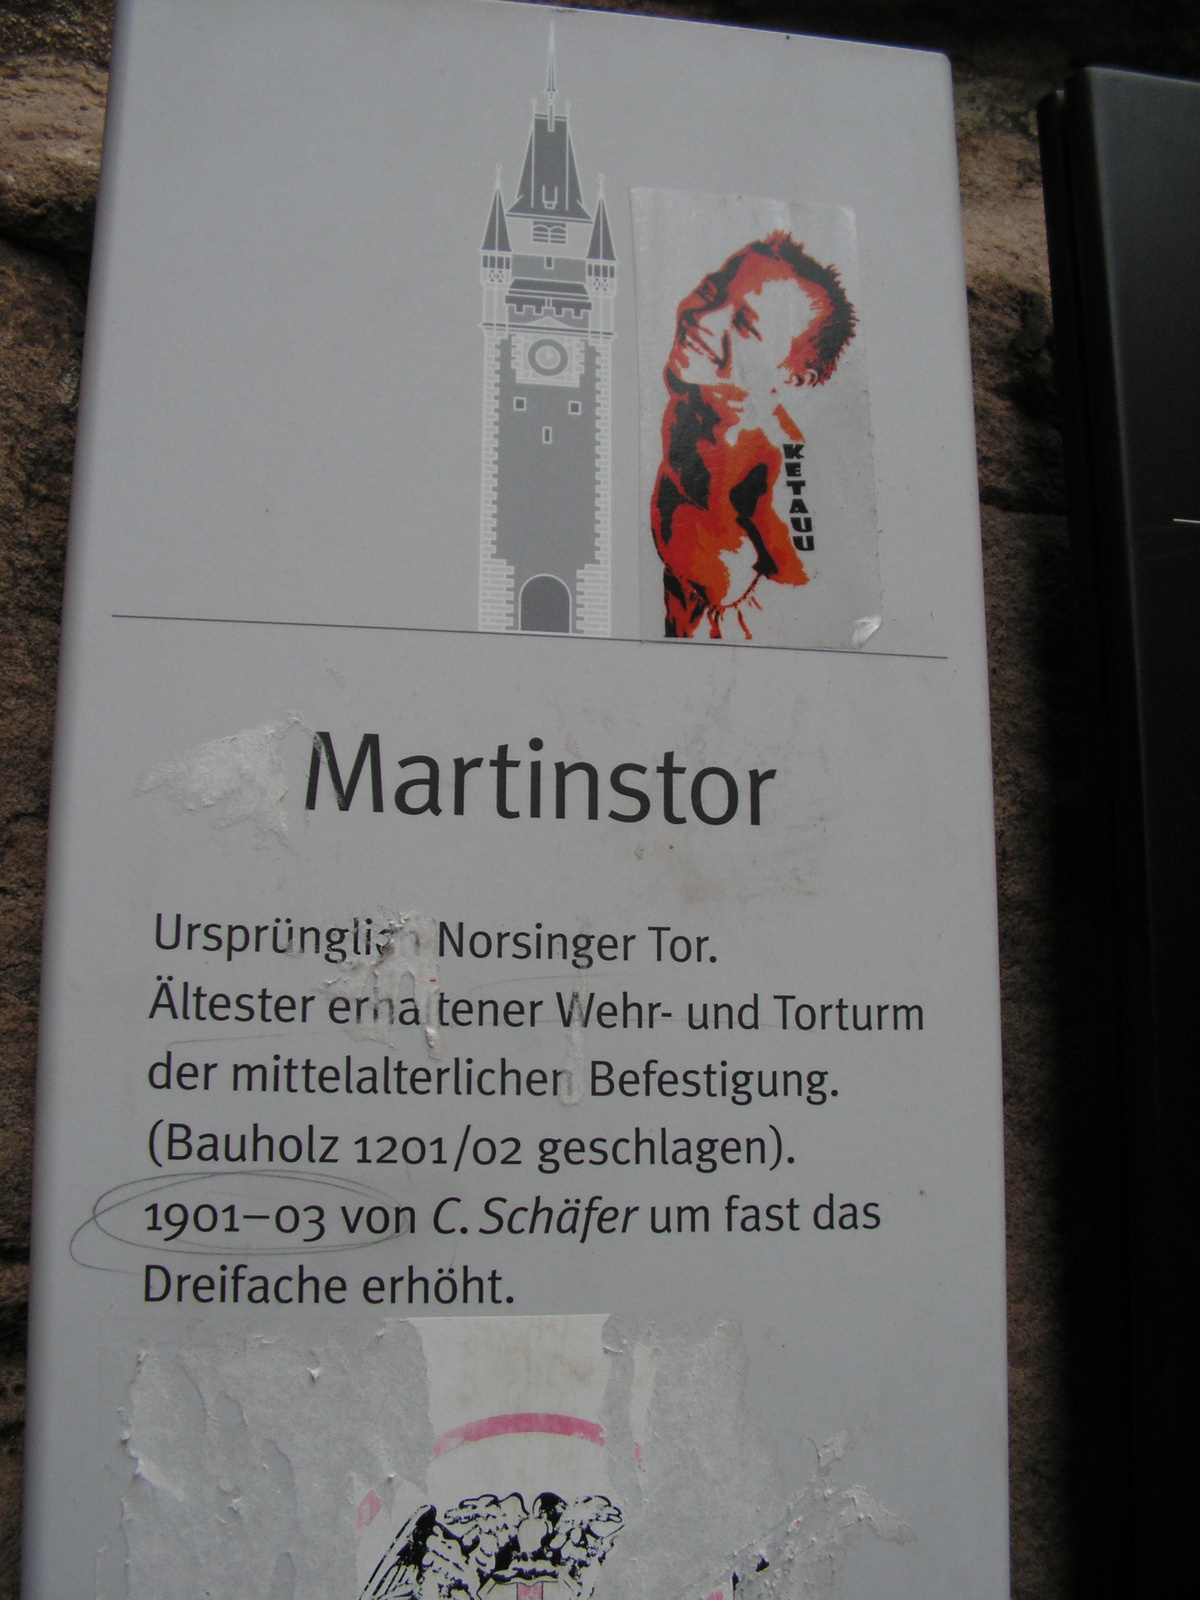 Freiburg, a Martinstor, SzG3